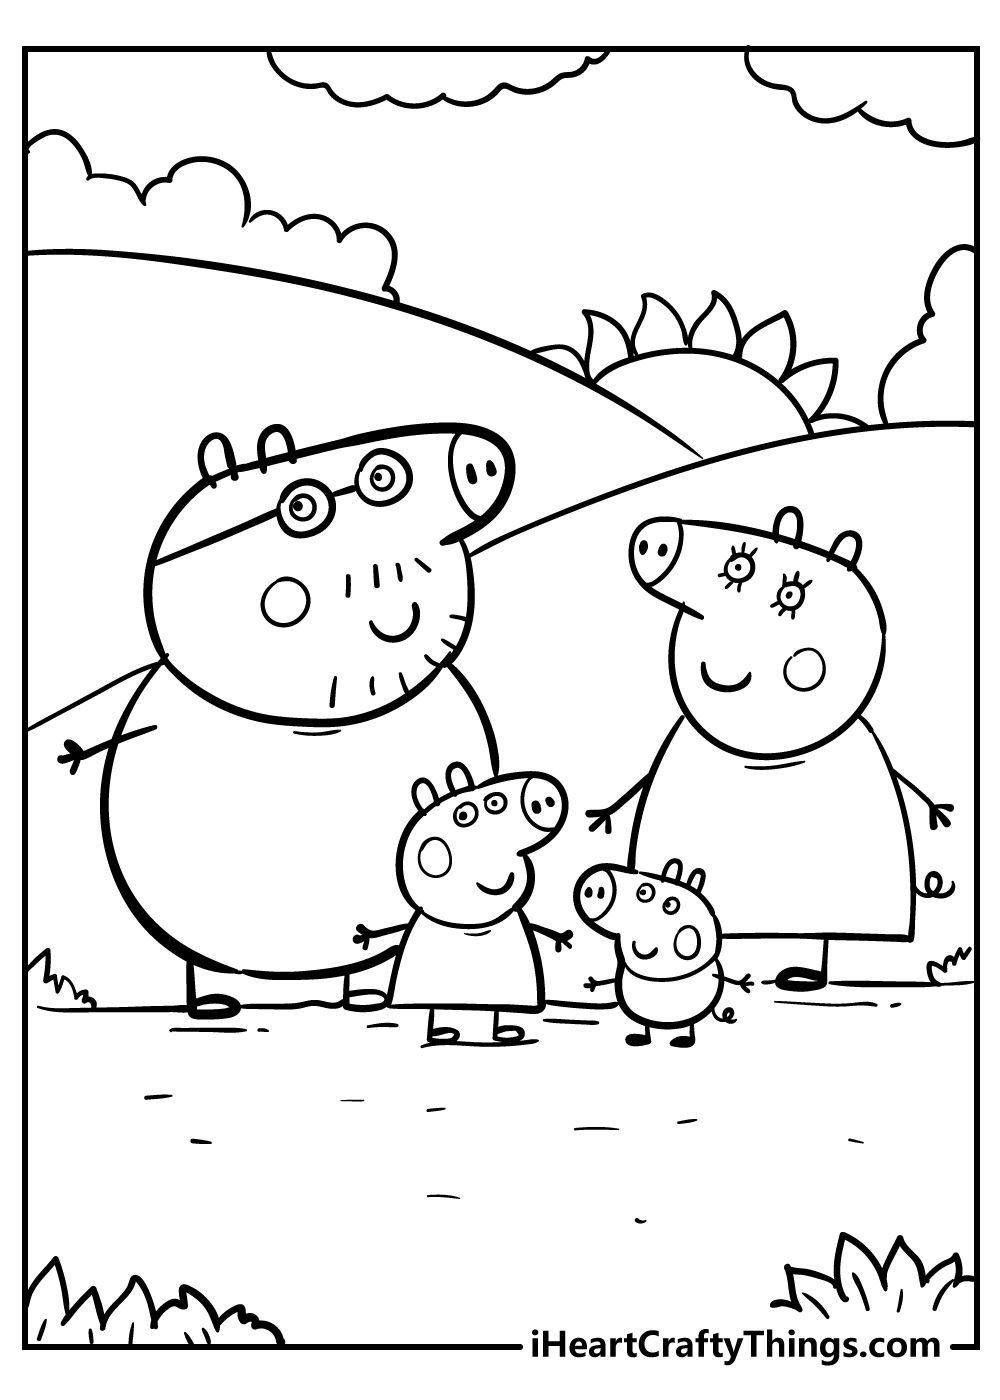 25 Easy Peppa Pig Drawing Ideas - Draw Peppa Pig-saigonsouth.com.vn